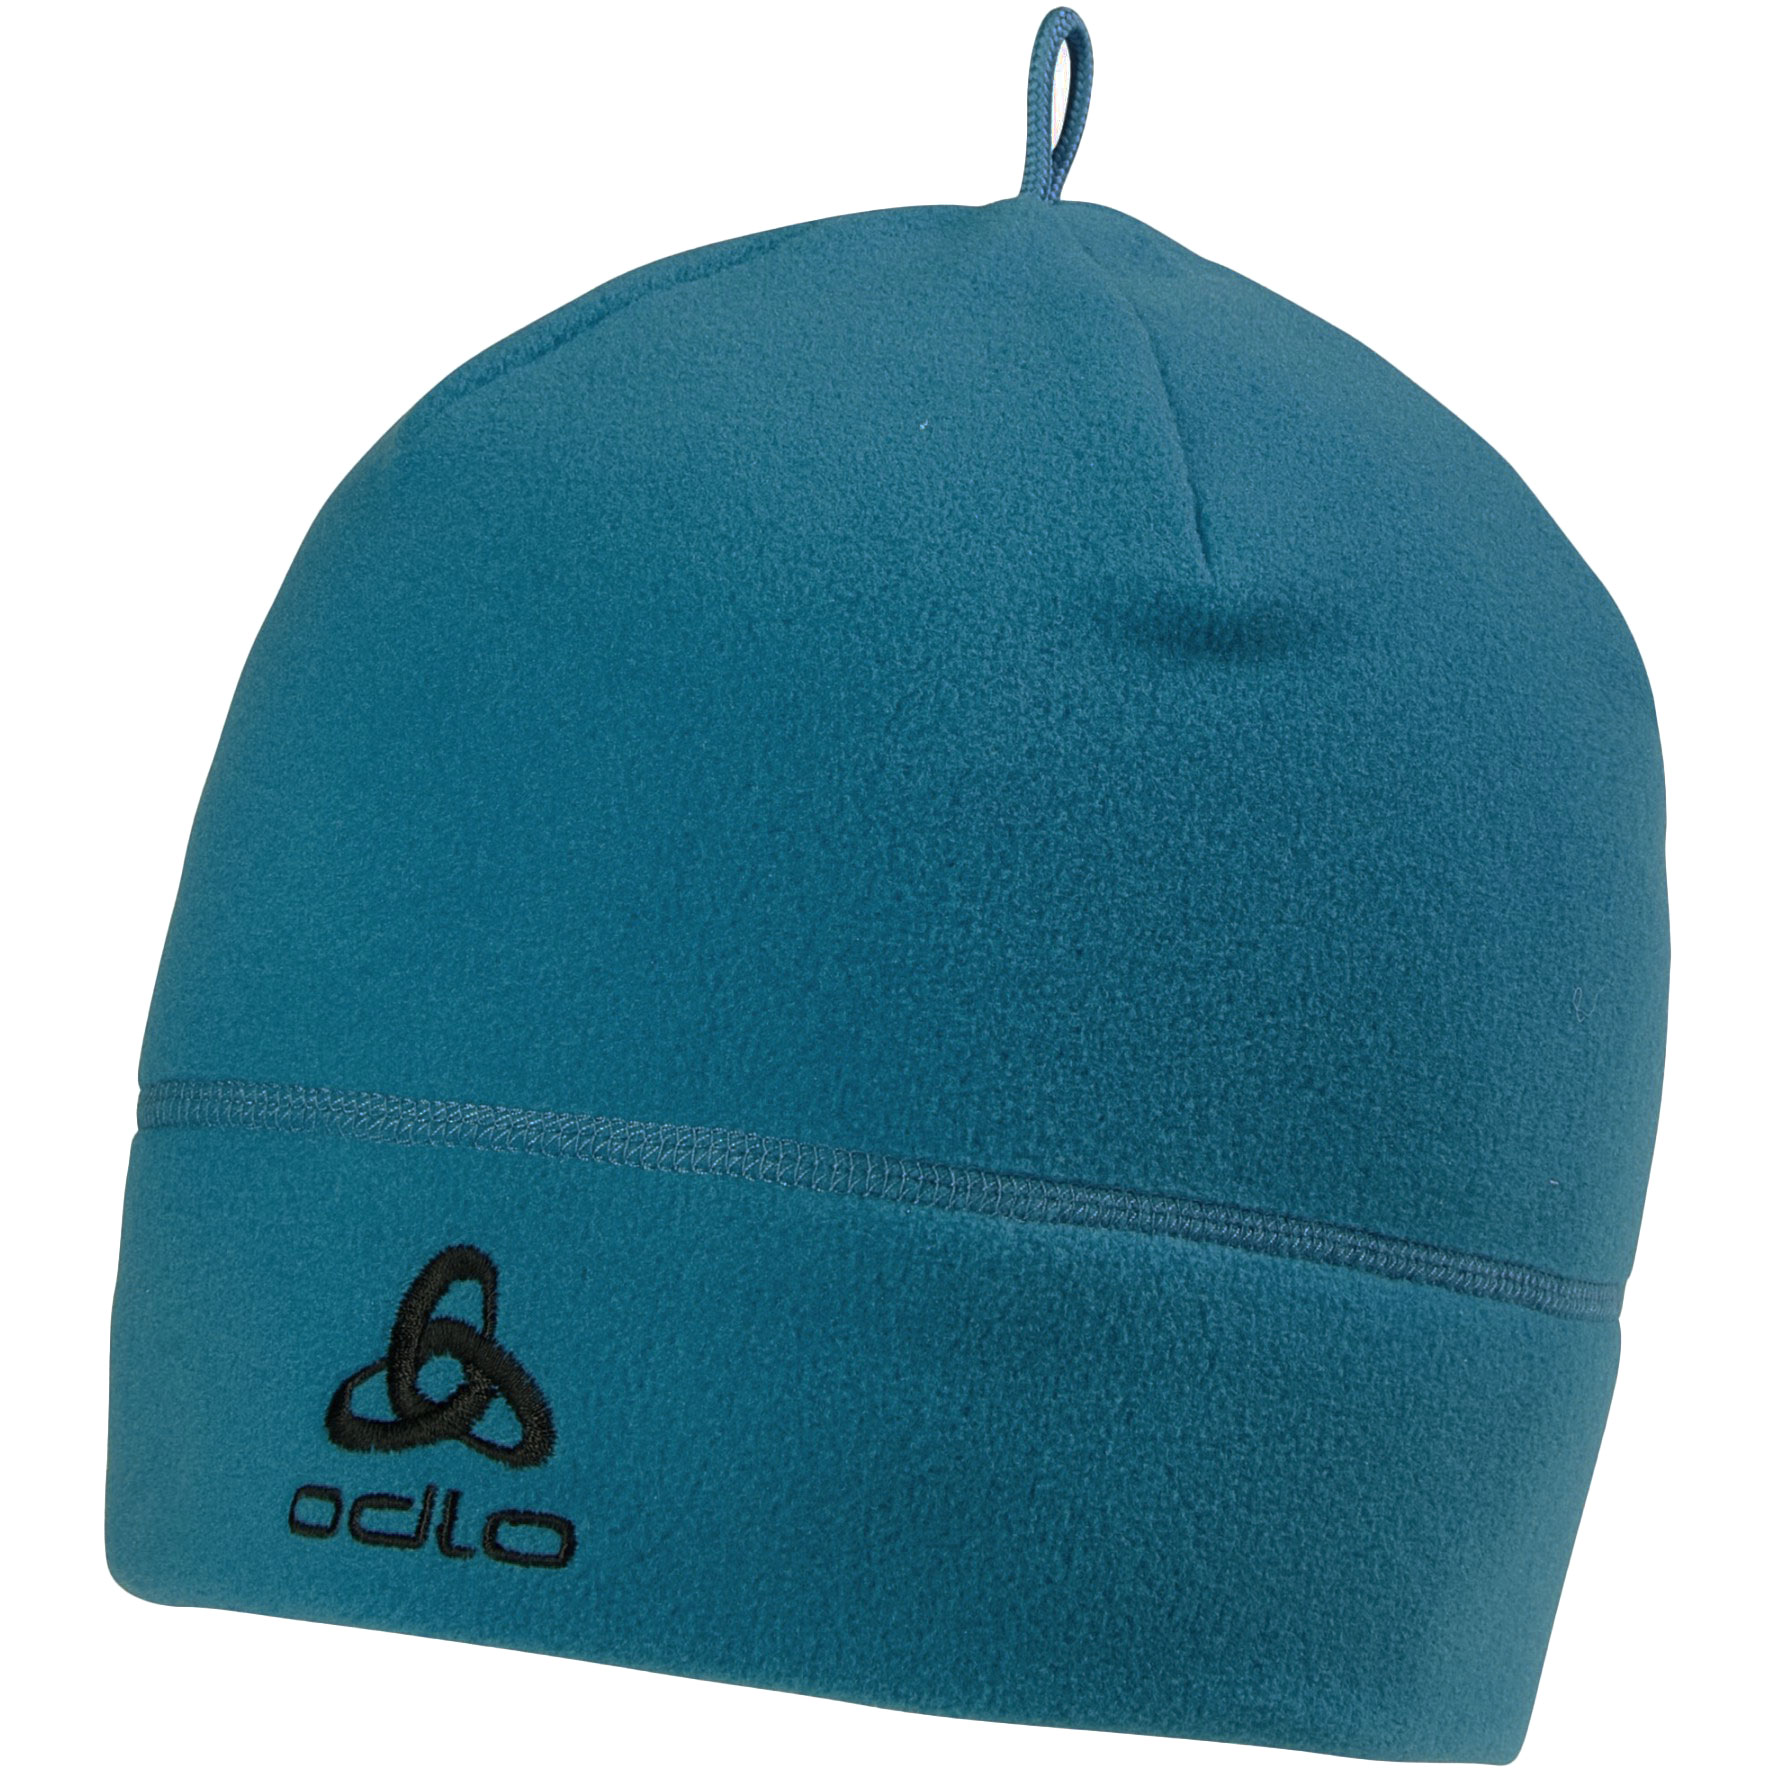 Odlo Bonnet - Microfleece Warm ECO - saxony blue